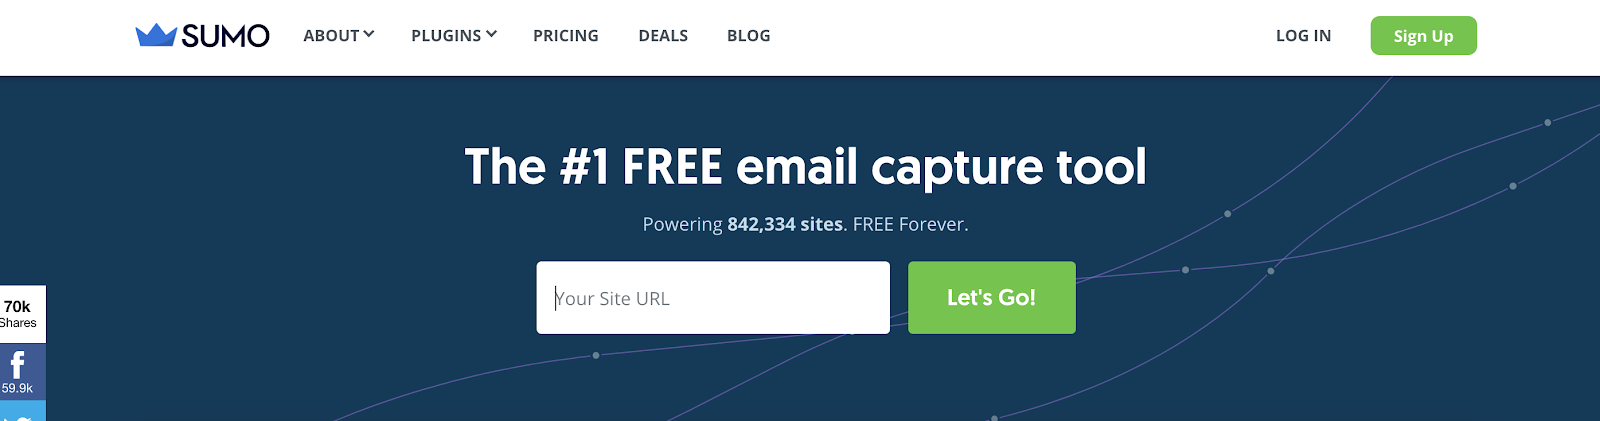 Sumo Plugin for WordPress Blog Marketing and Promotion (Screenshot of Homepage)